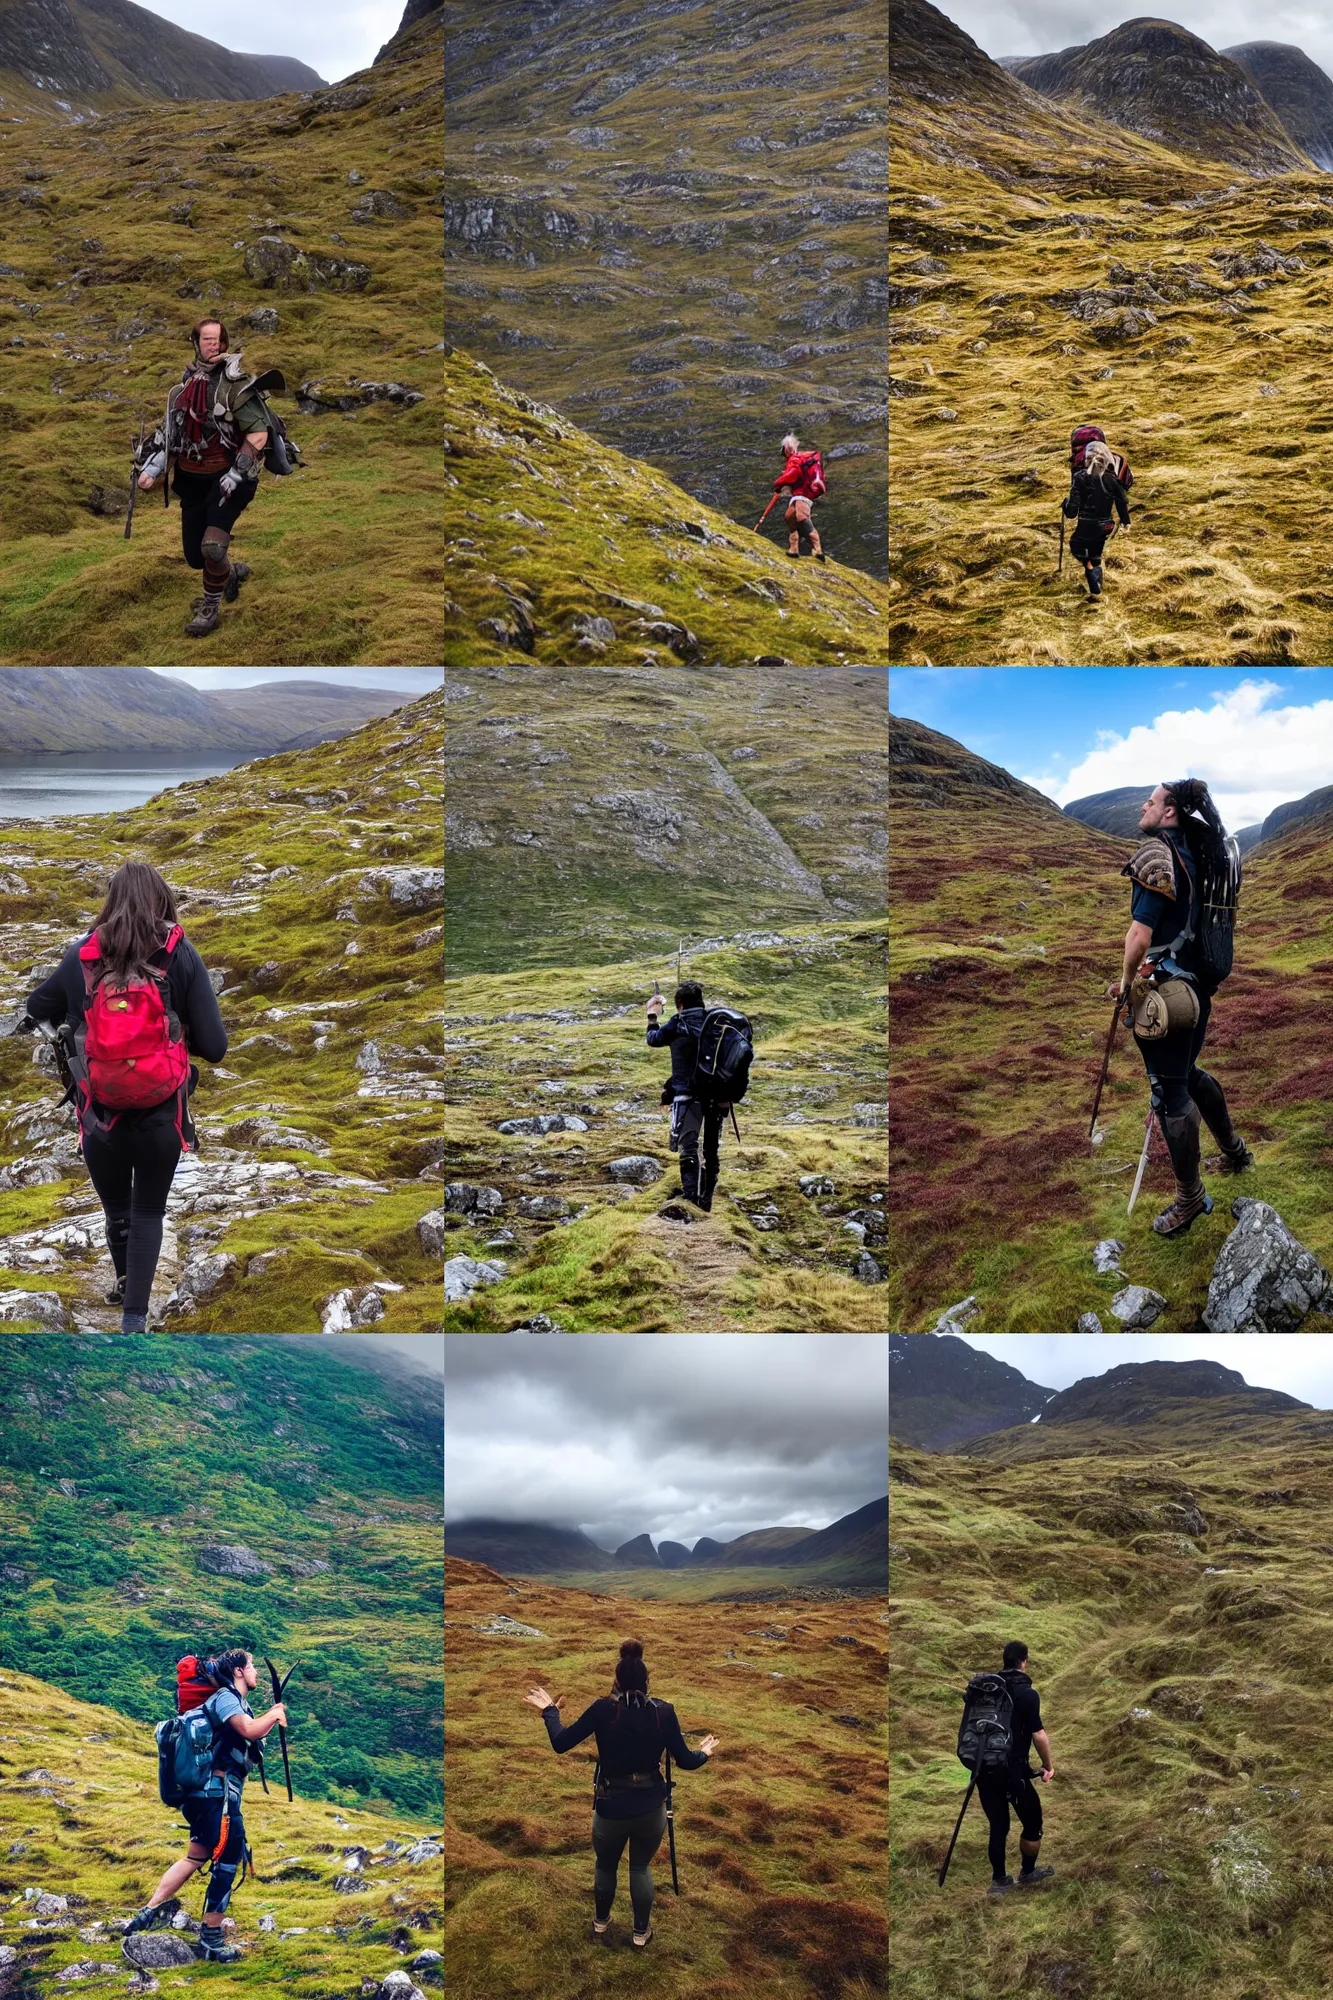 Prompt: Warrior exploring the highlands